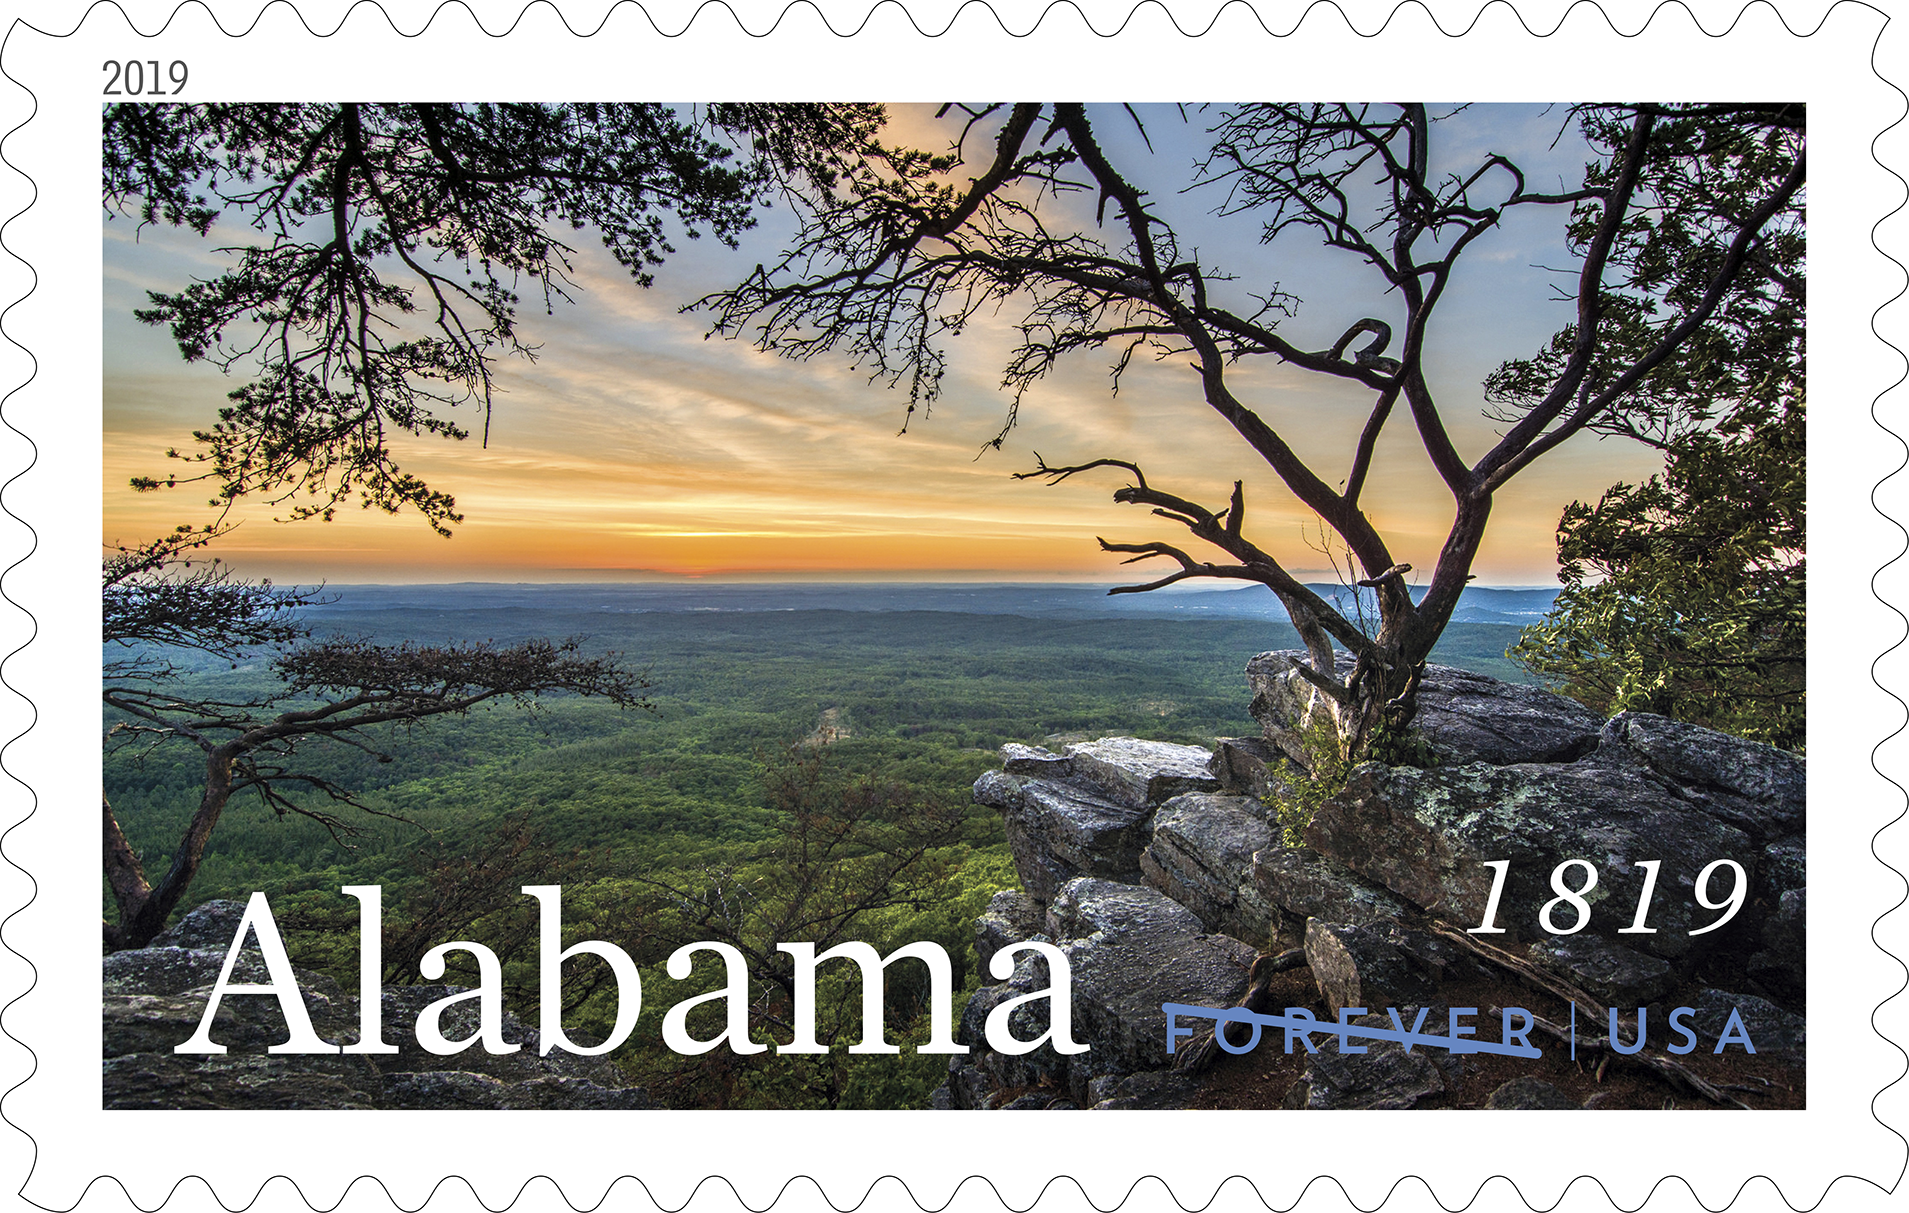 USPS issues Forever stamp celebrating Alabama’s bicentennial